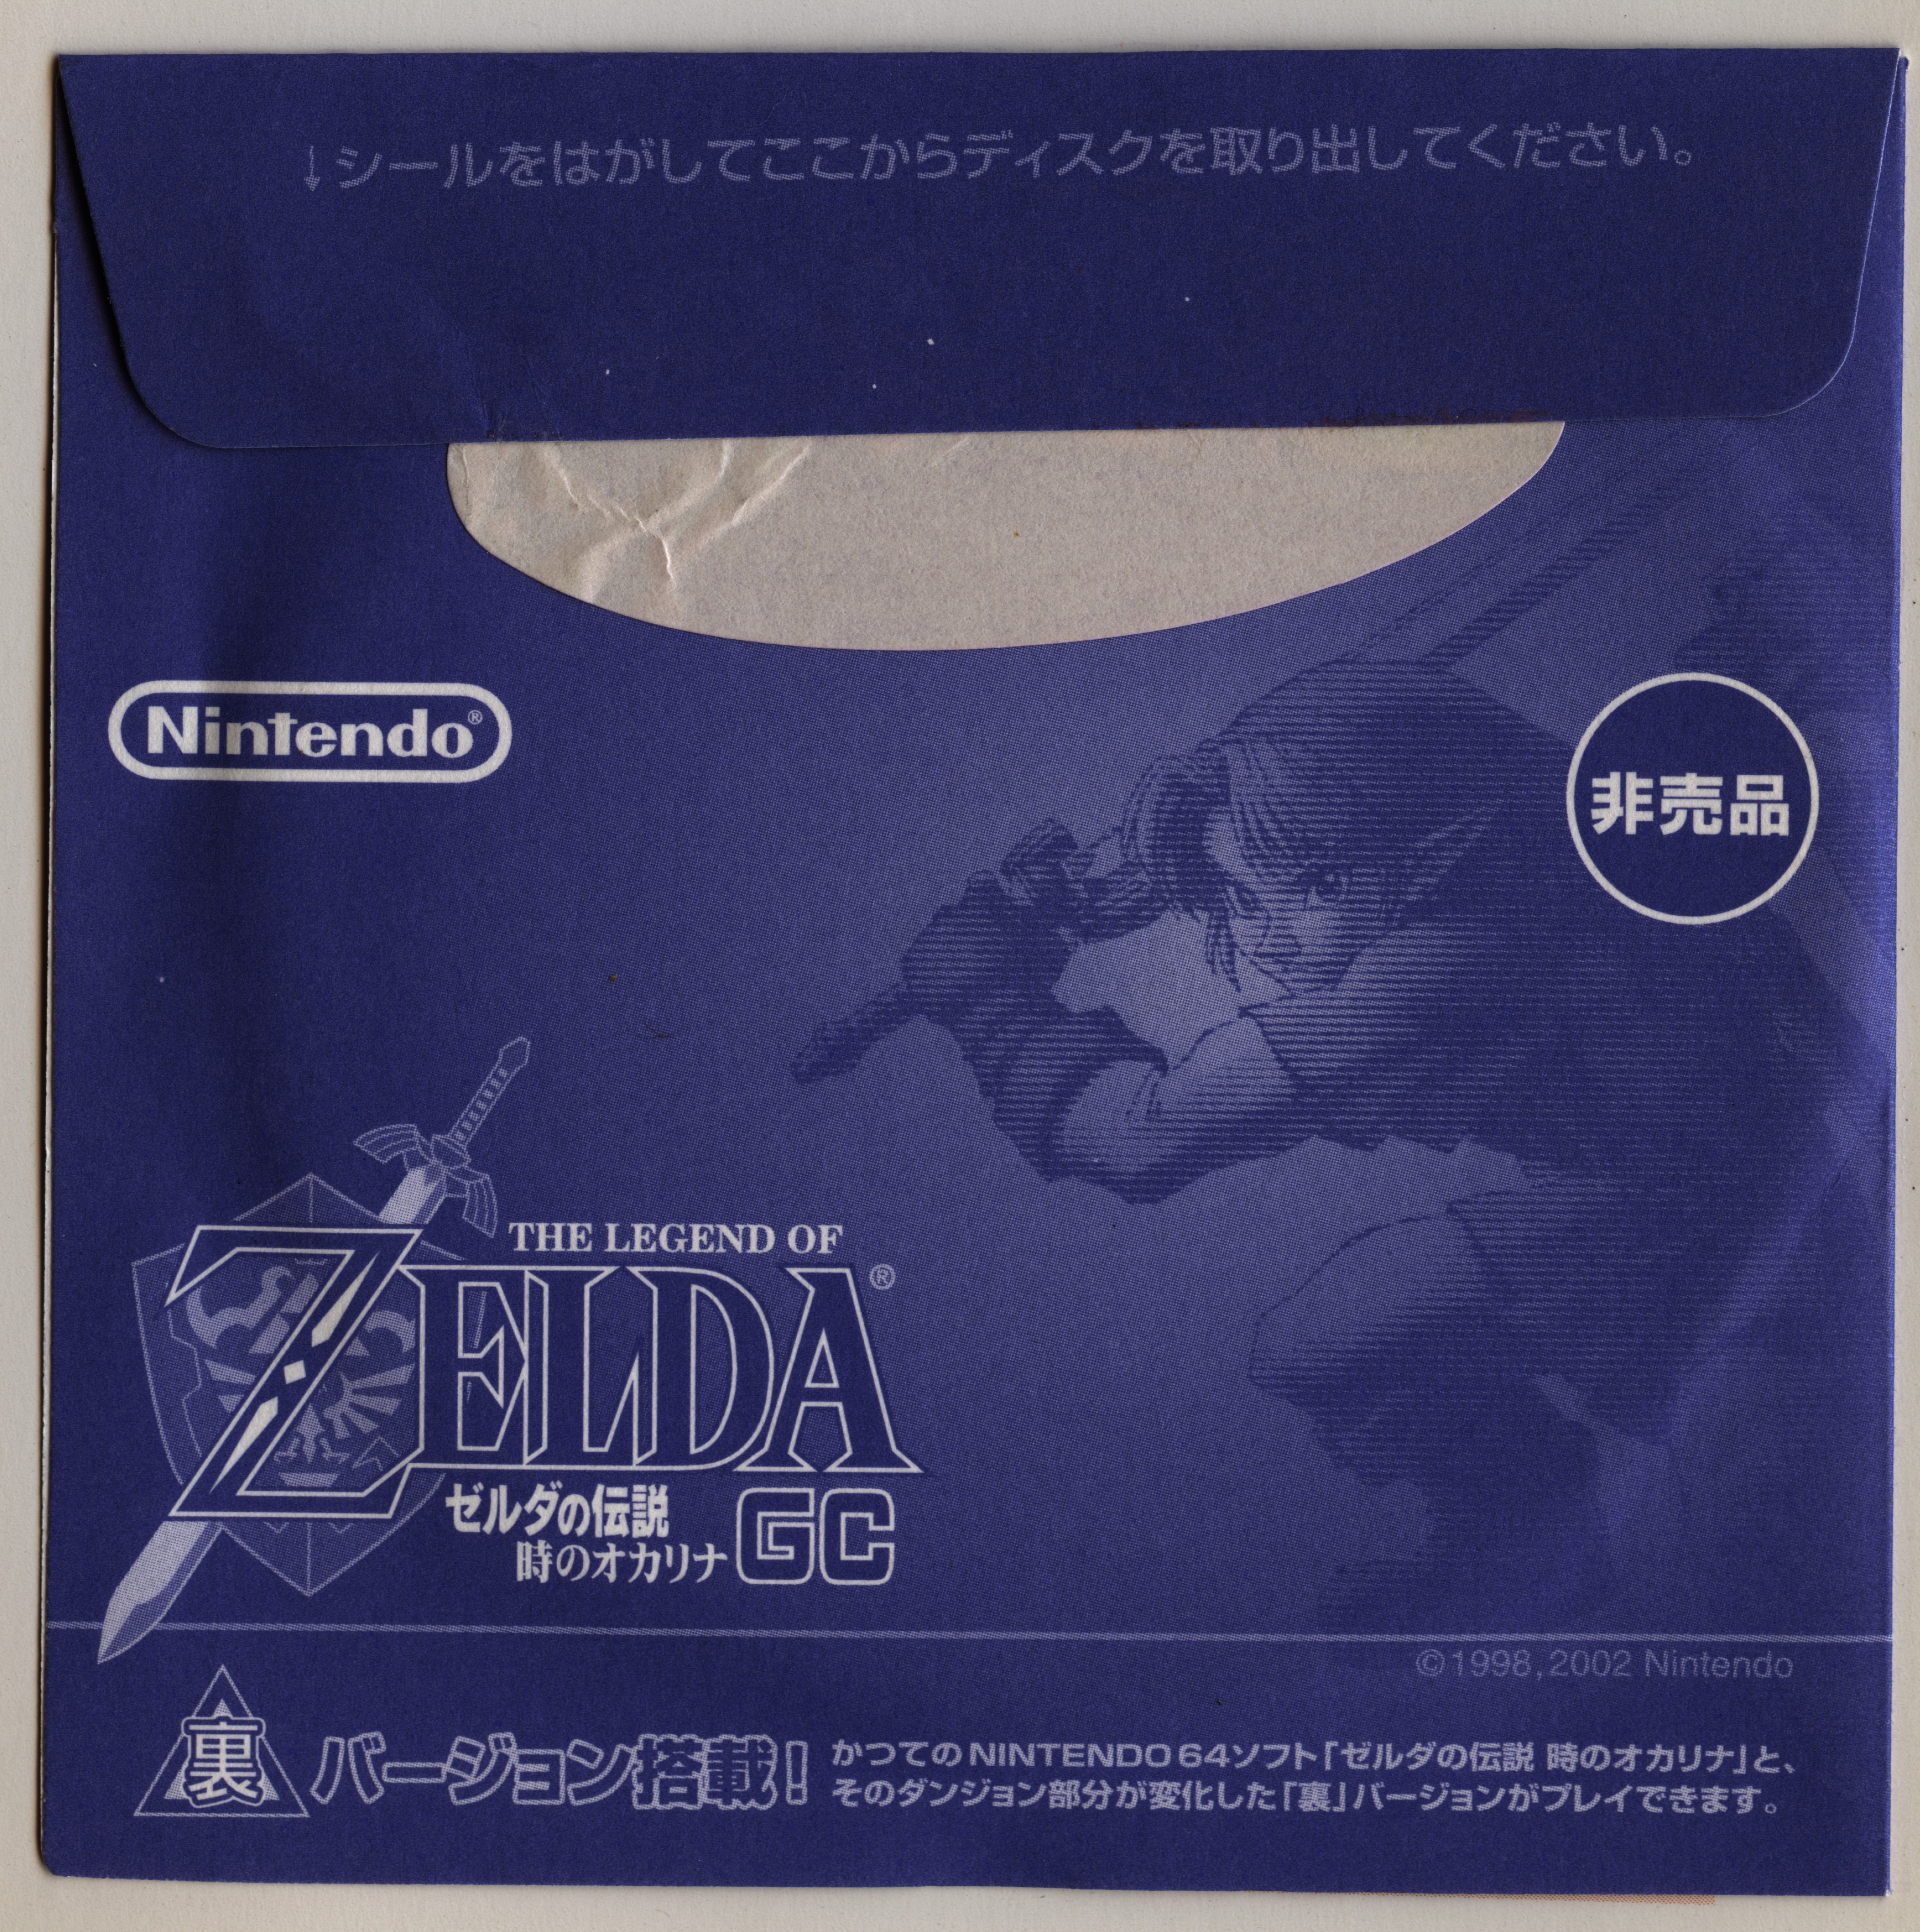 The Legend of Zelda Ocarina of Time Master Quest Rom Nintendo 